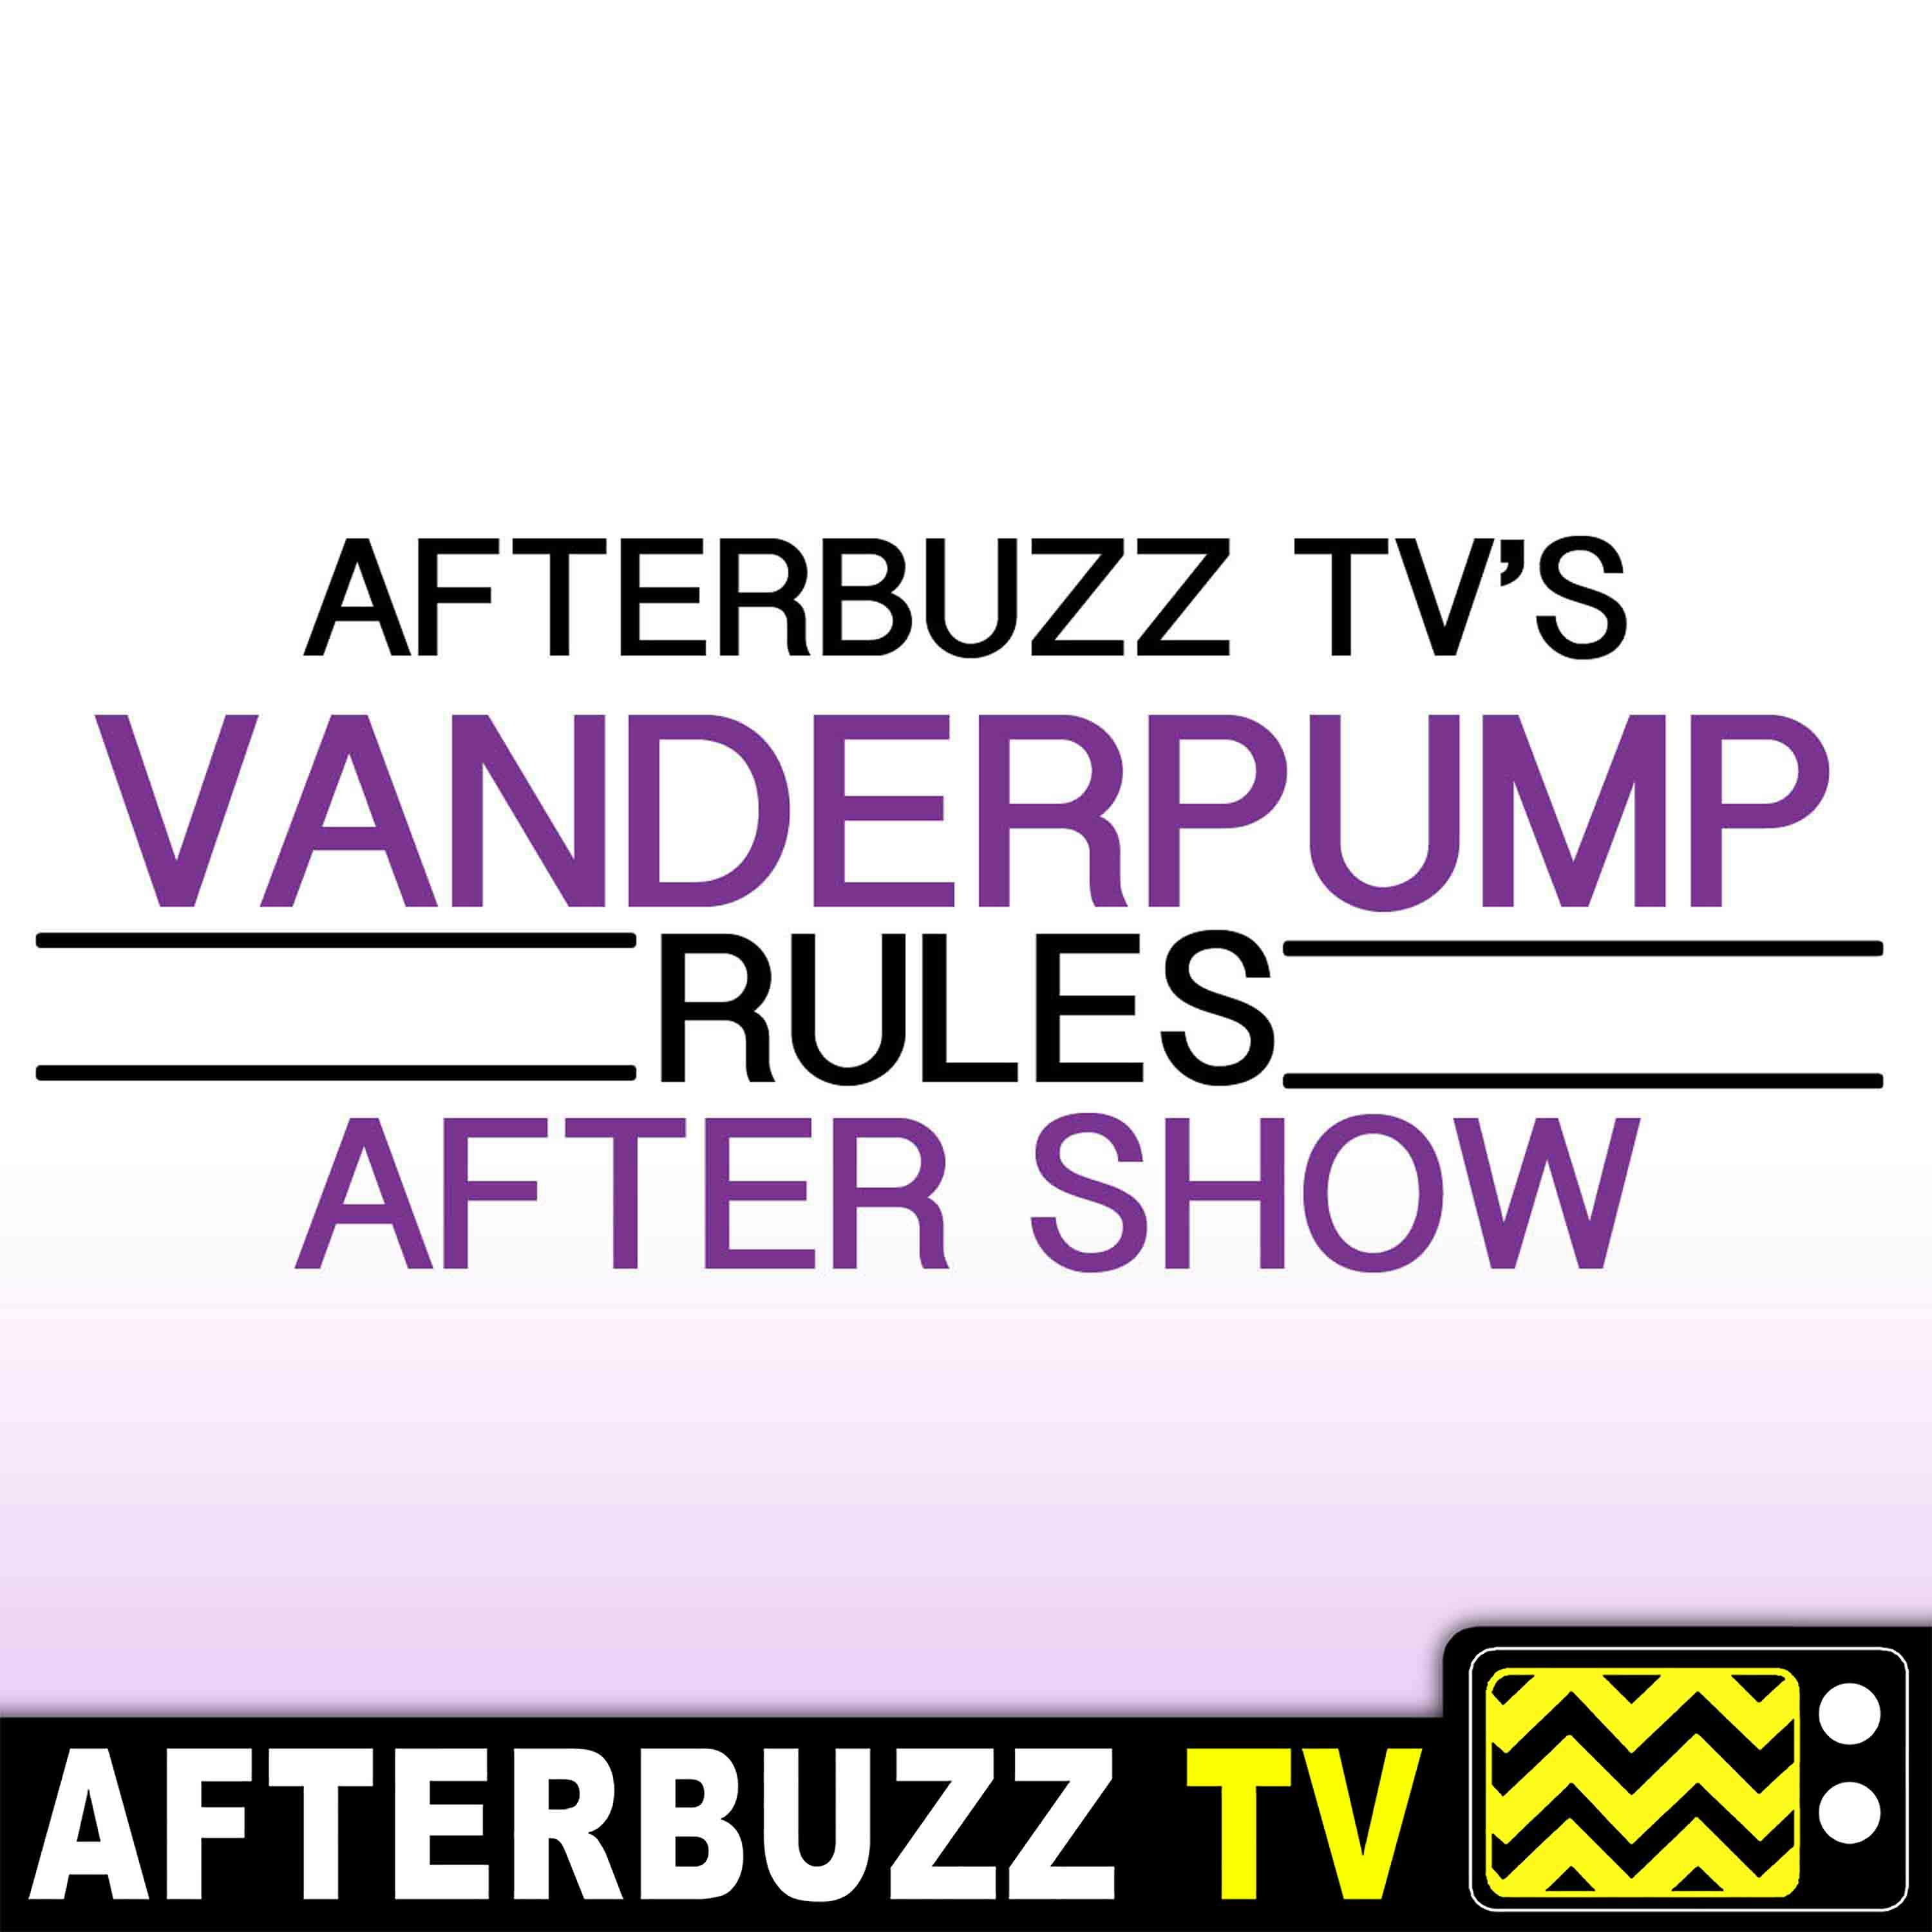 ”Rules of Engagement” Season 7 Episode 21 ’Vanderpump Rules’ Review